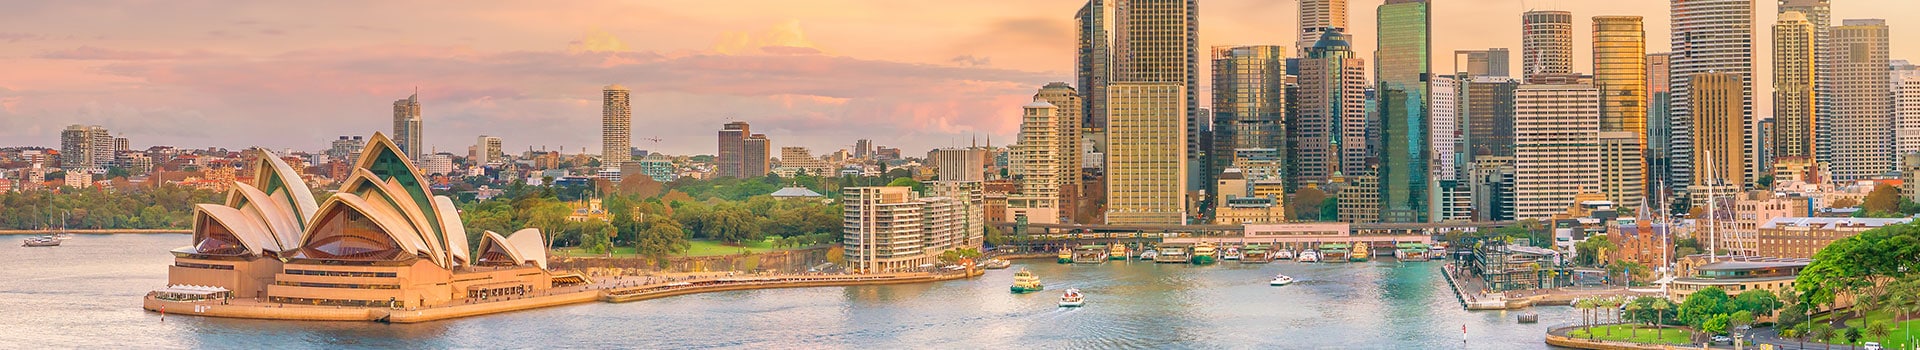 Singapore - Sydney